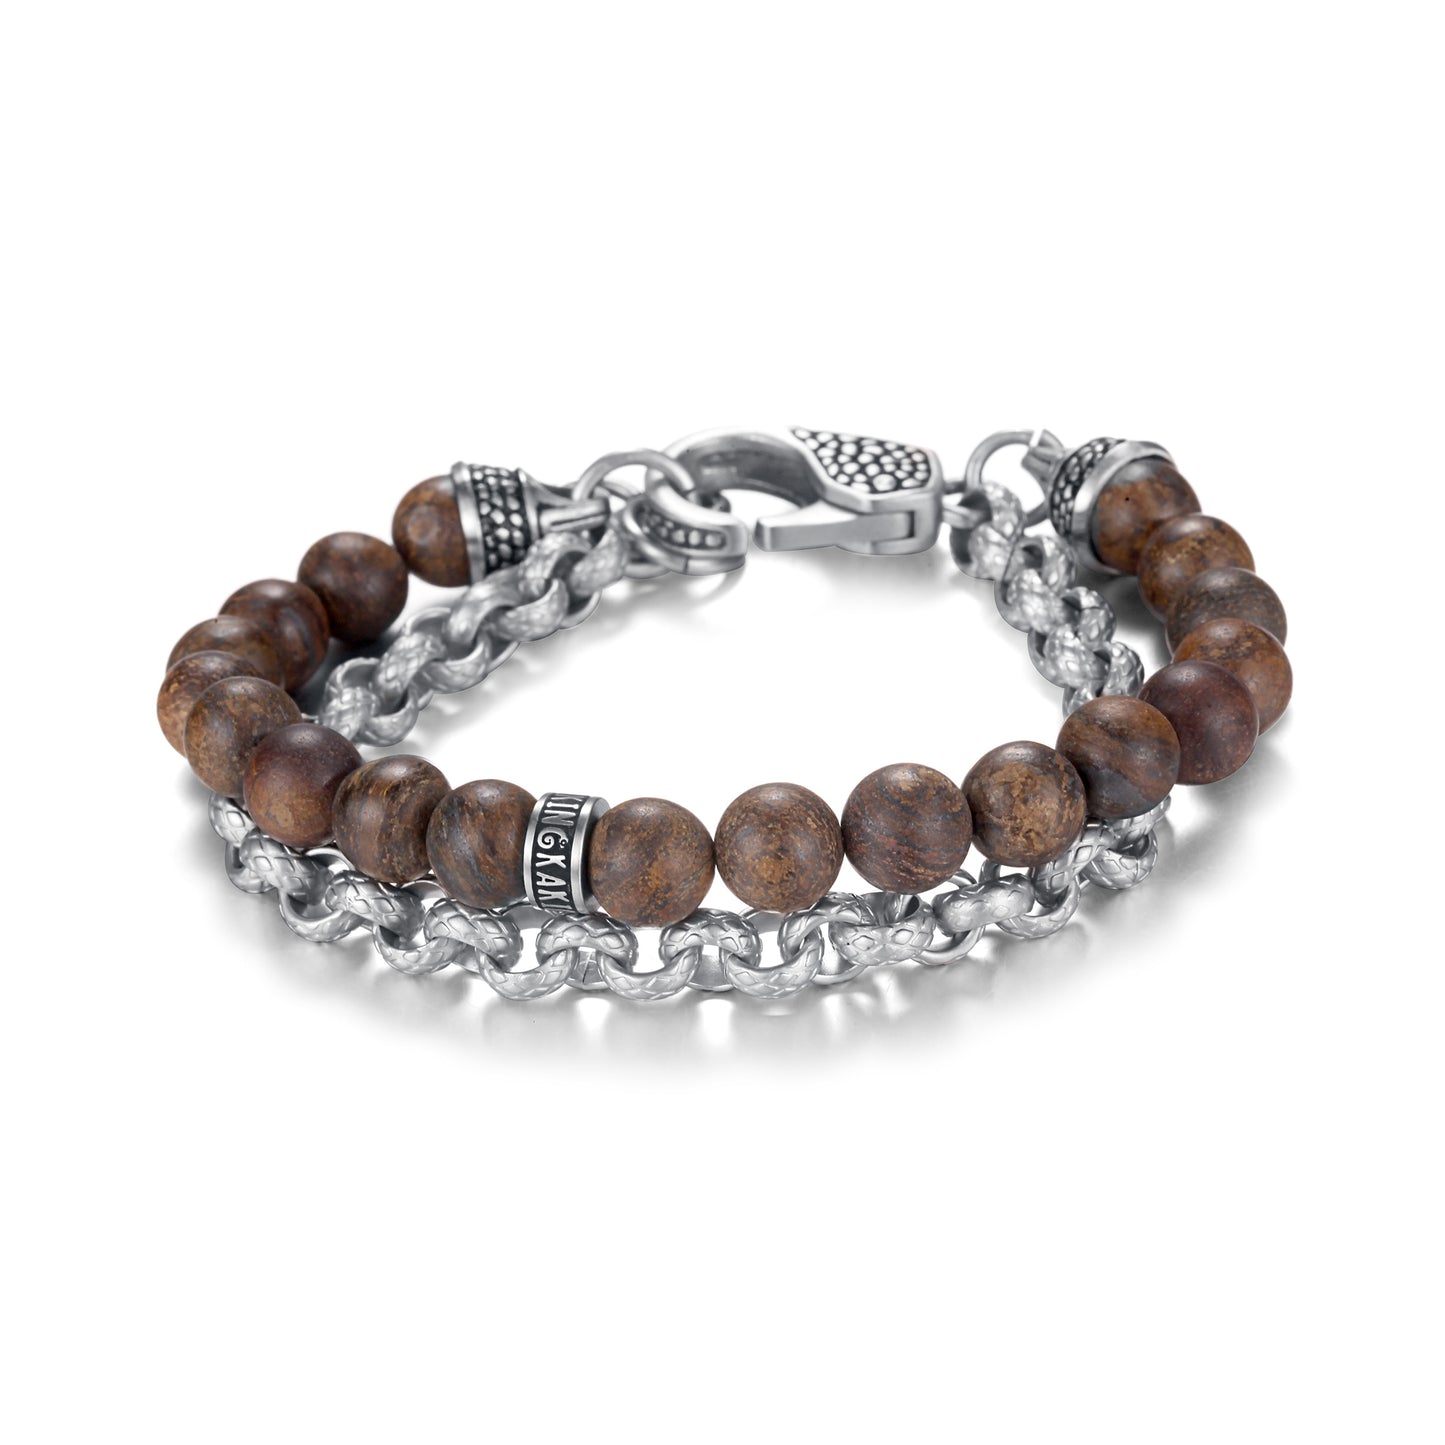 Men's Wrap-Around Bracelet with Stones, Cable Chain - KINGKA Jewelry